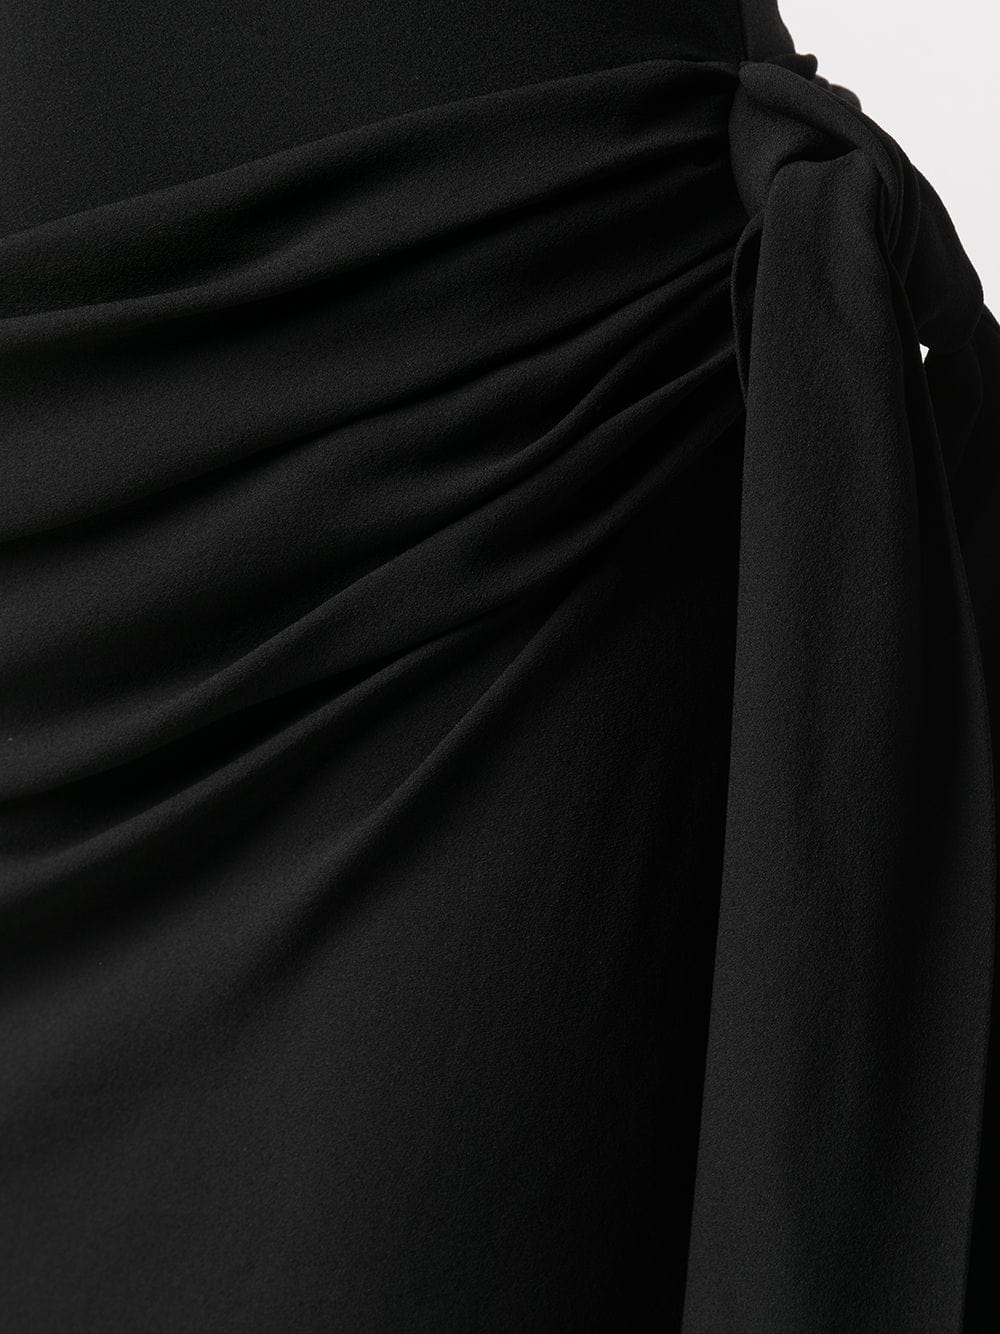 Dolce & Gabbana Knot Detail Midi Dress